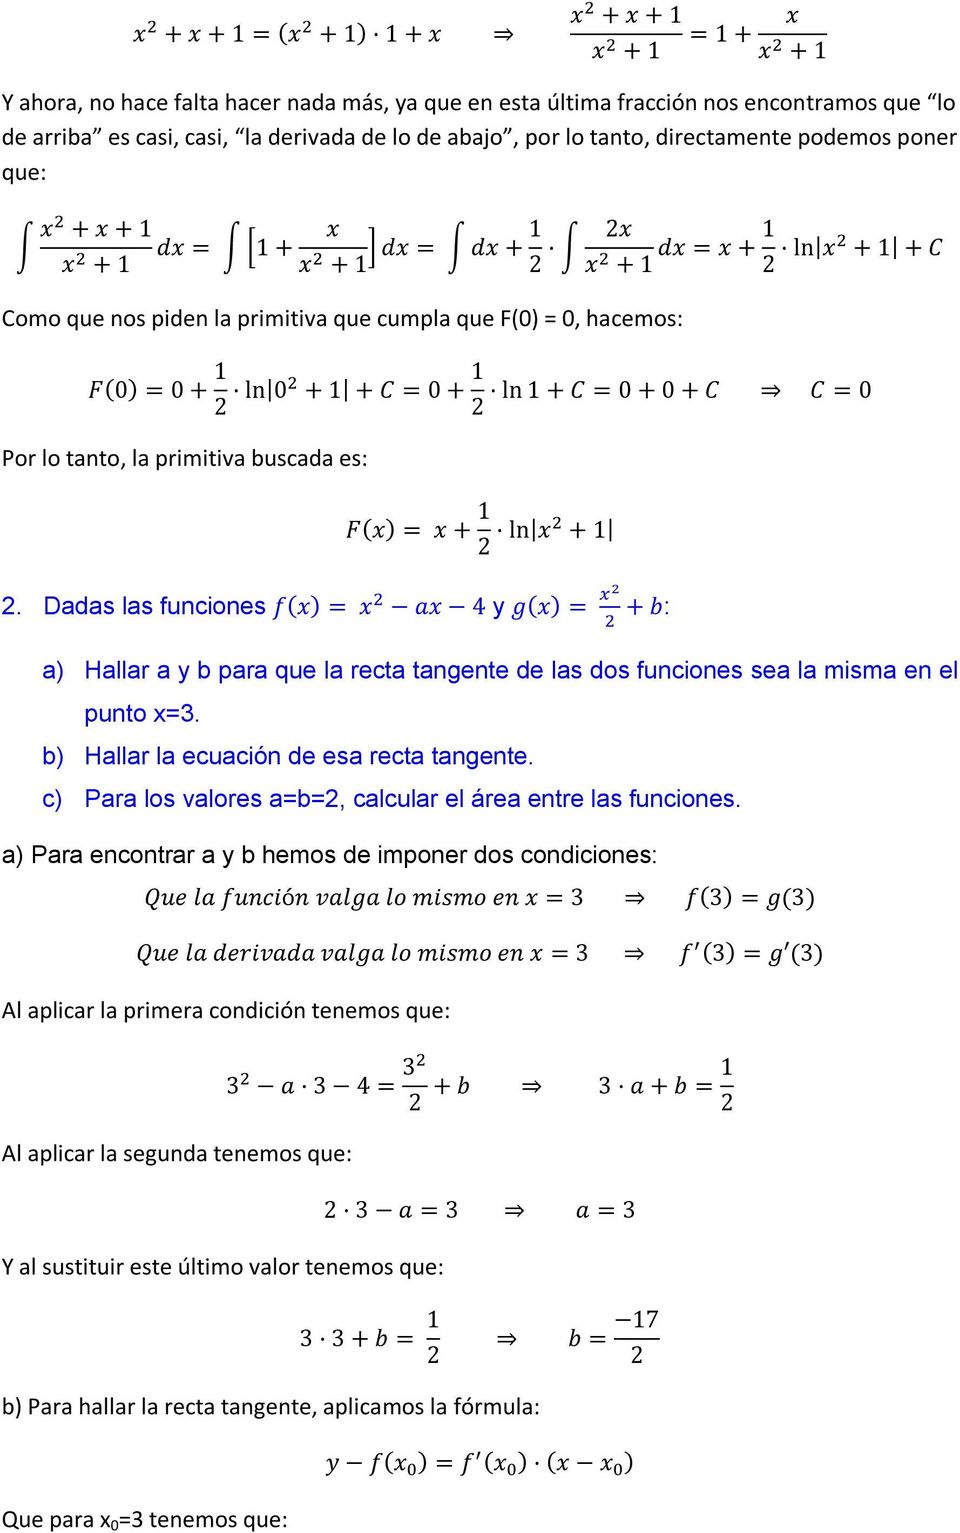 F(0) = 0 + 1 ln 0 + 1 + C = 0 + 1 ln 1 + C = 0 + 0 + C C = 0 Por lo tanto, la primitiva buscada es: F(x) = x + 1 ln x + 1.